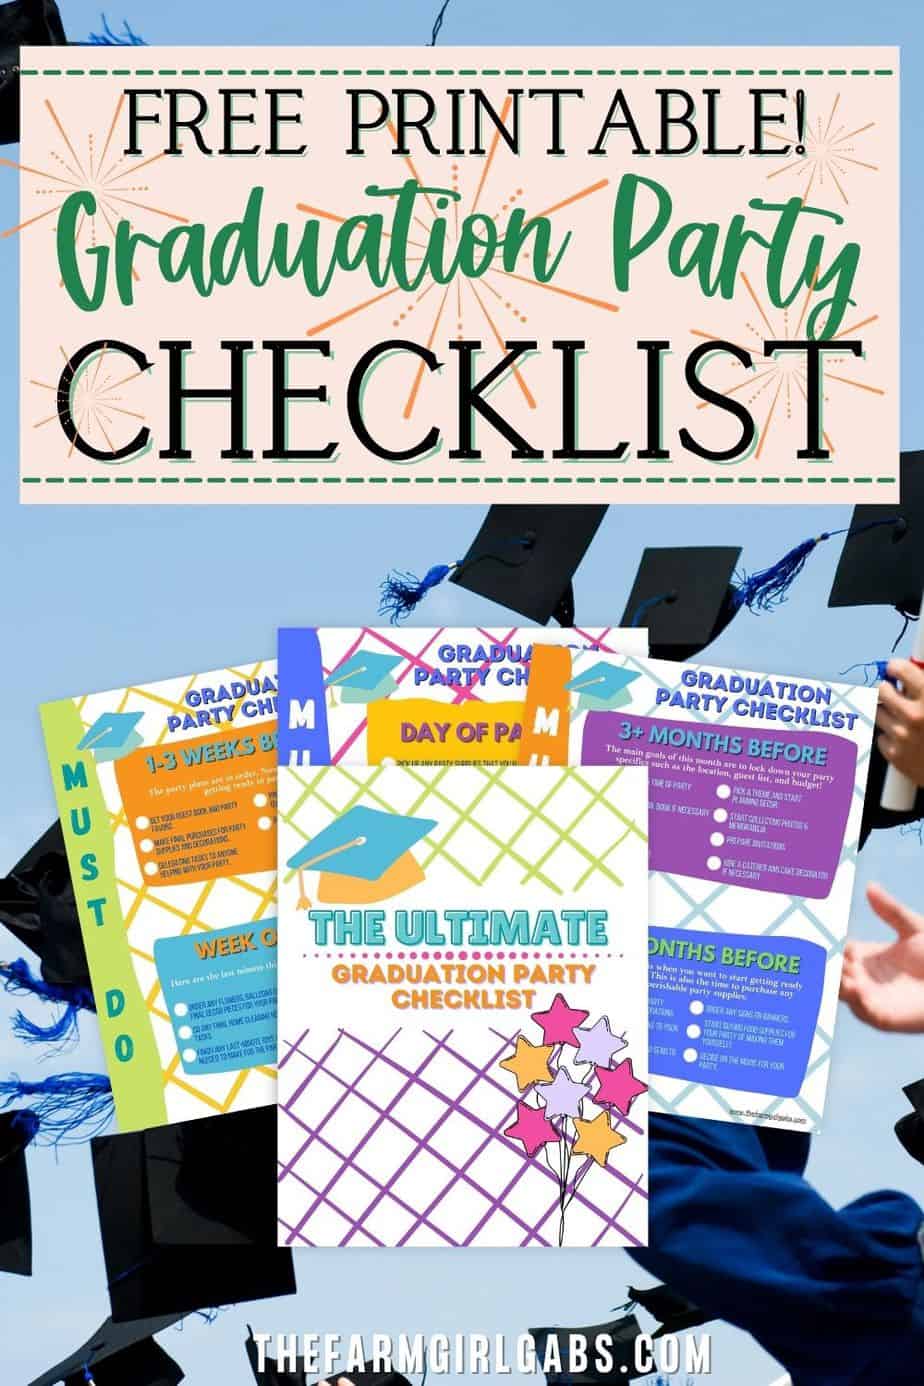 The Ultimate Graduation Party Checklist The Farm Girl Gabs®